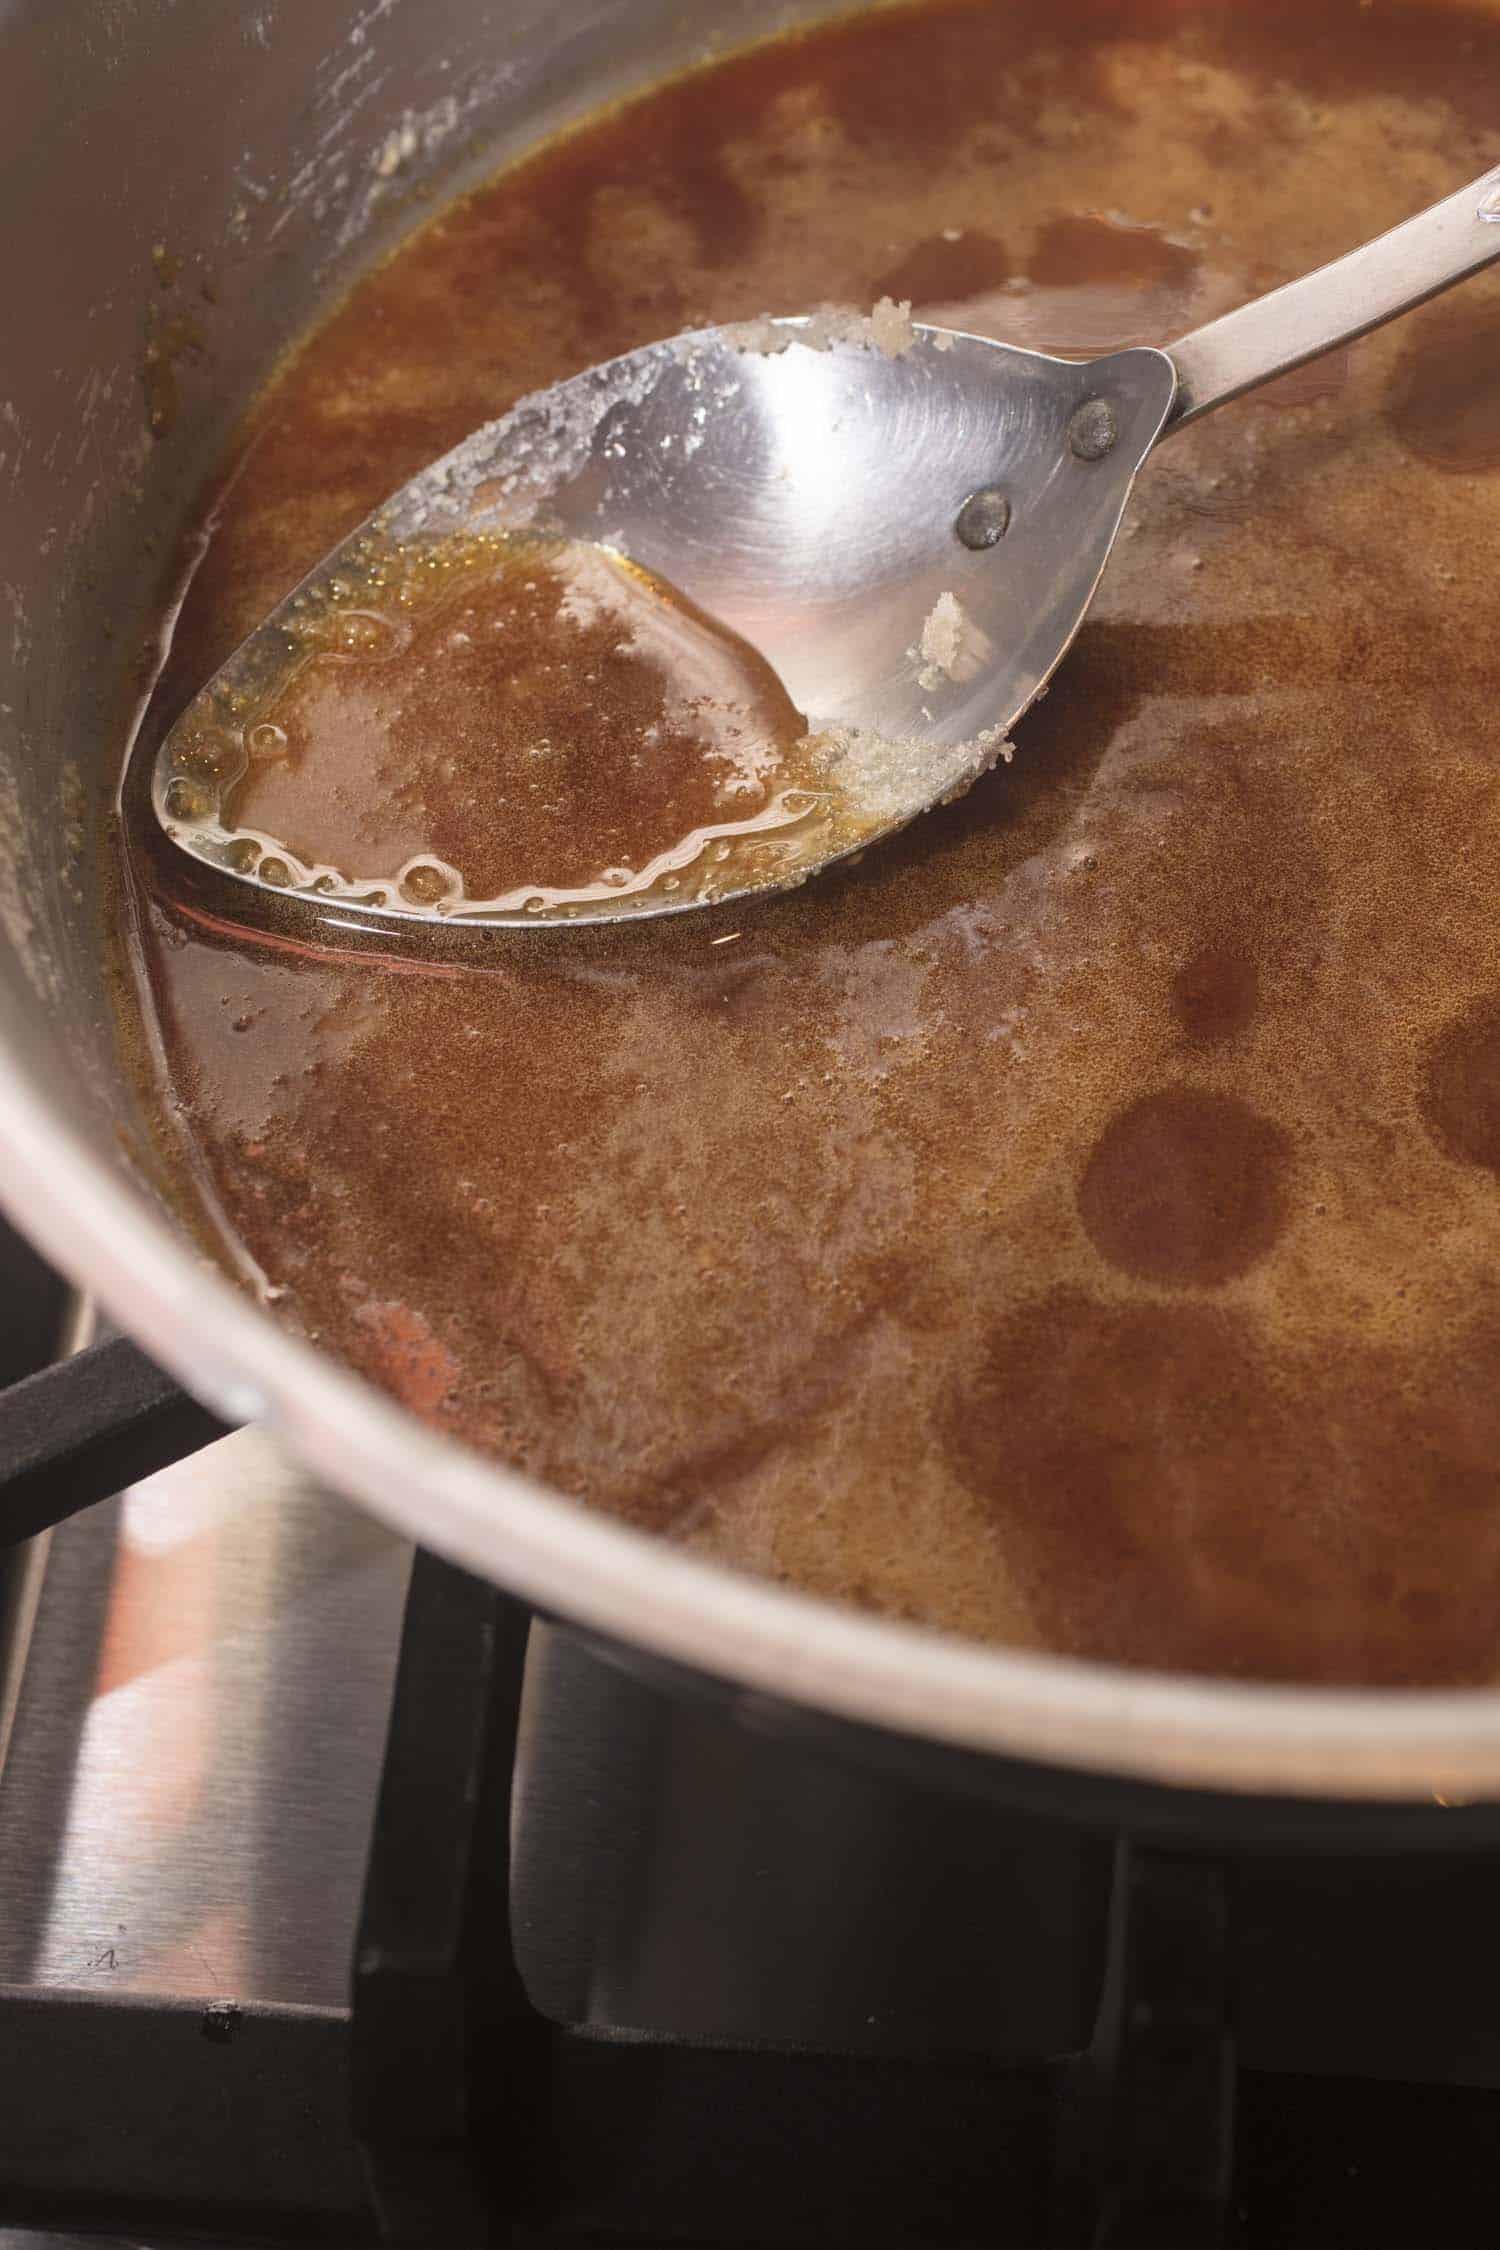 Creme caramel cooking for a flan recipe.